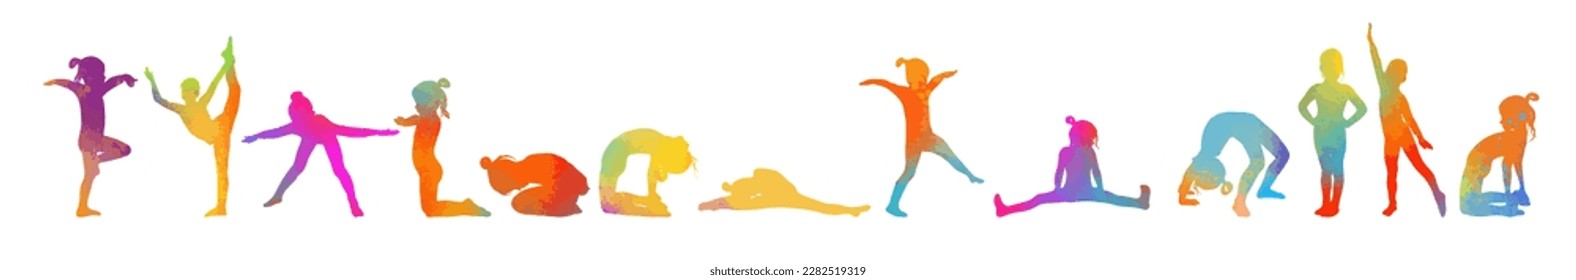 Girls gymnast colored silhouettes. School of children's gymnastics . Vector illustration